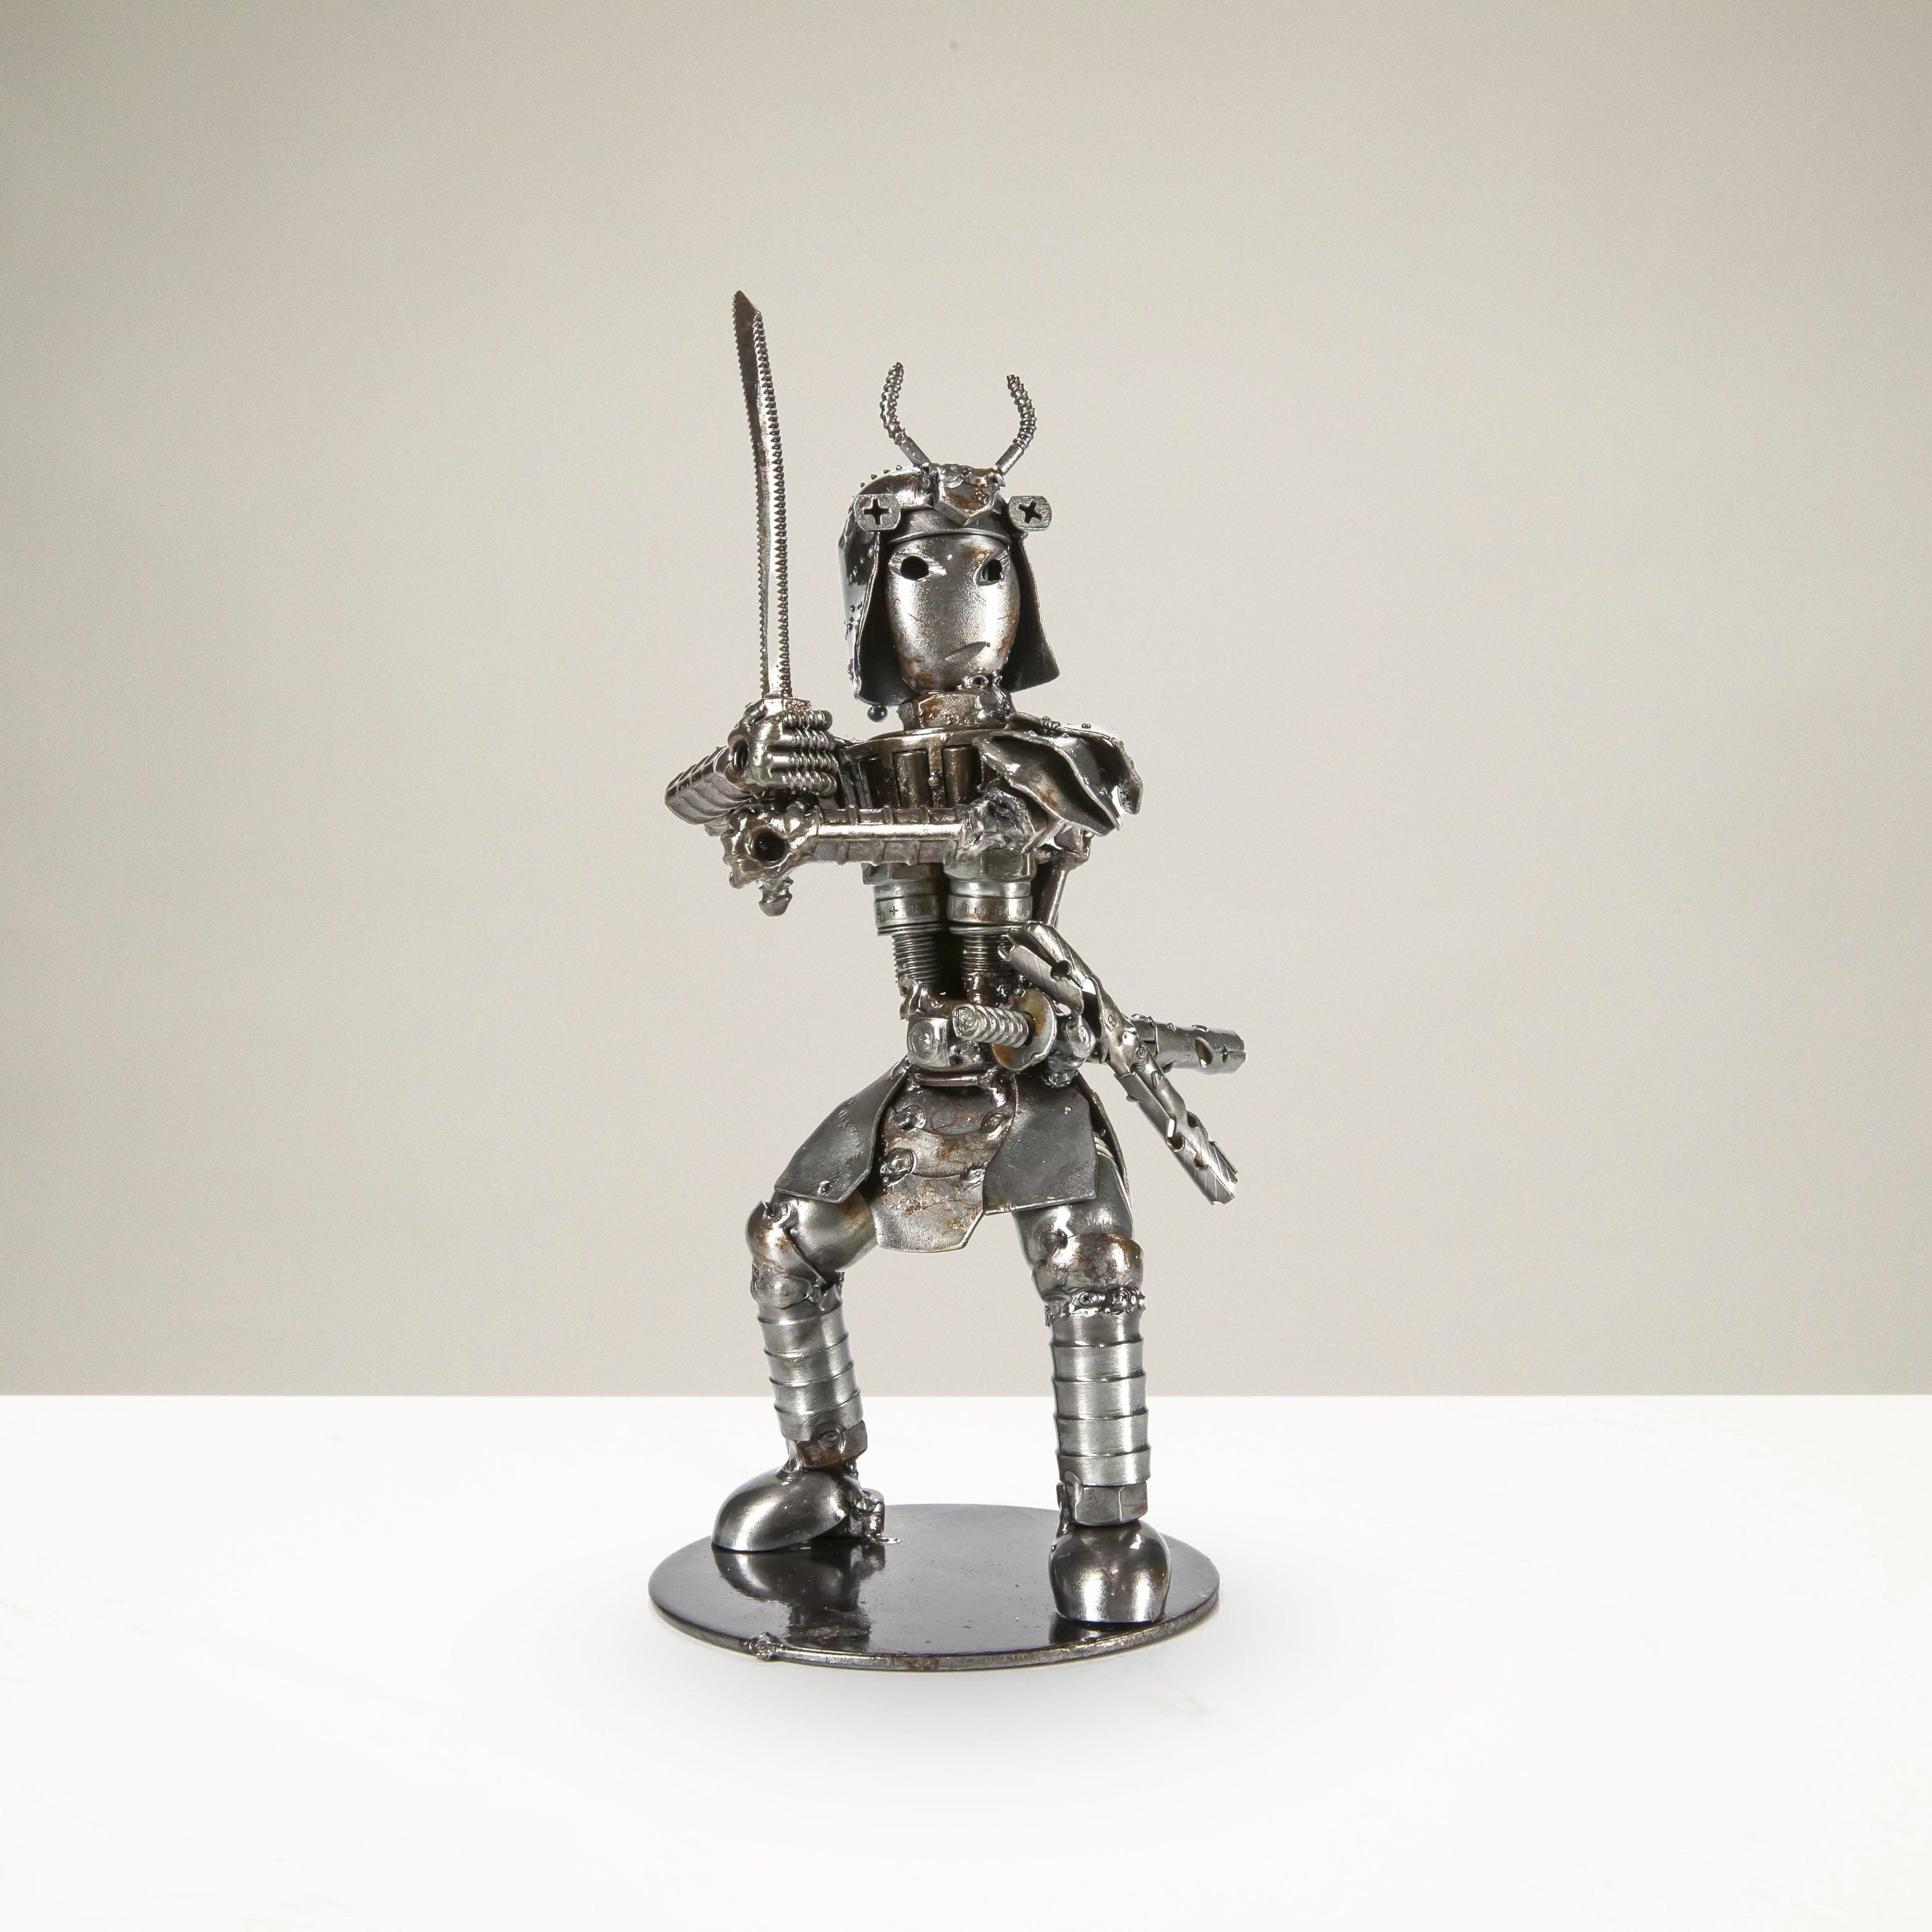 Samurai Inspired Recycled Metal Sculpture